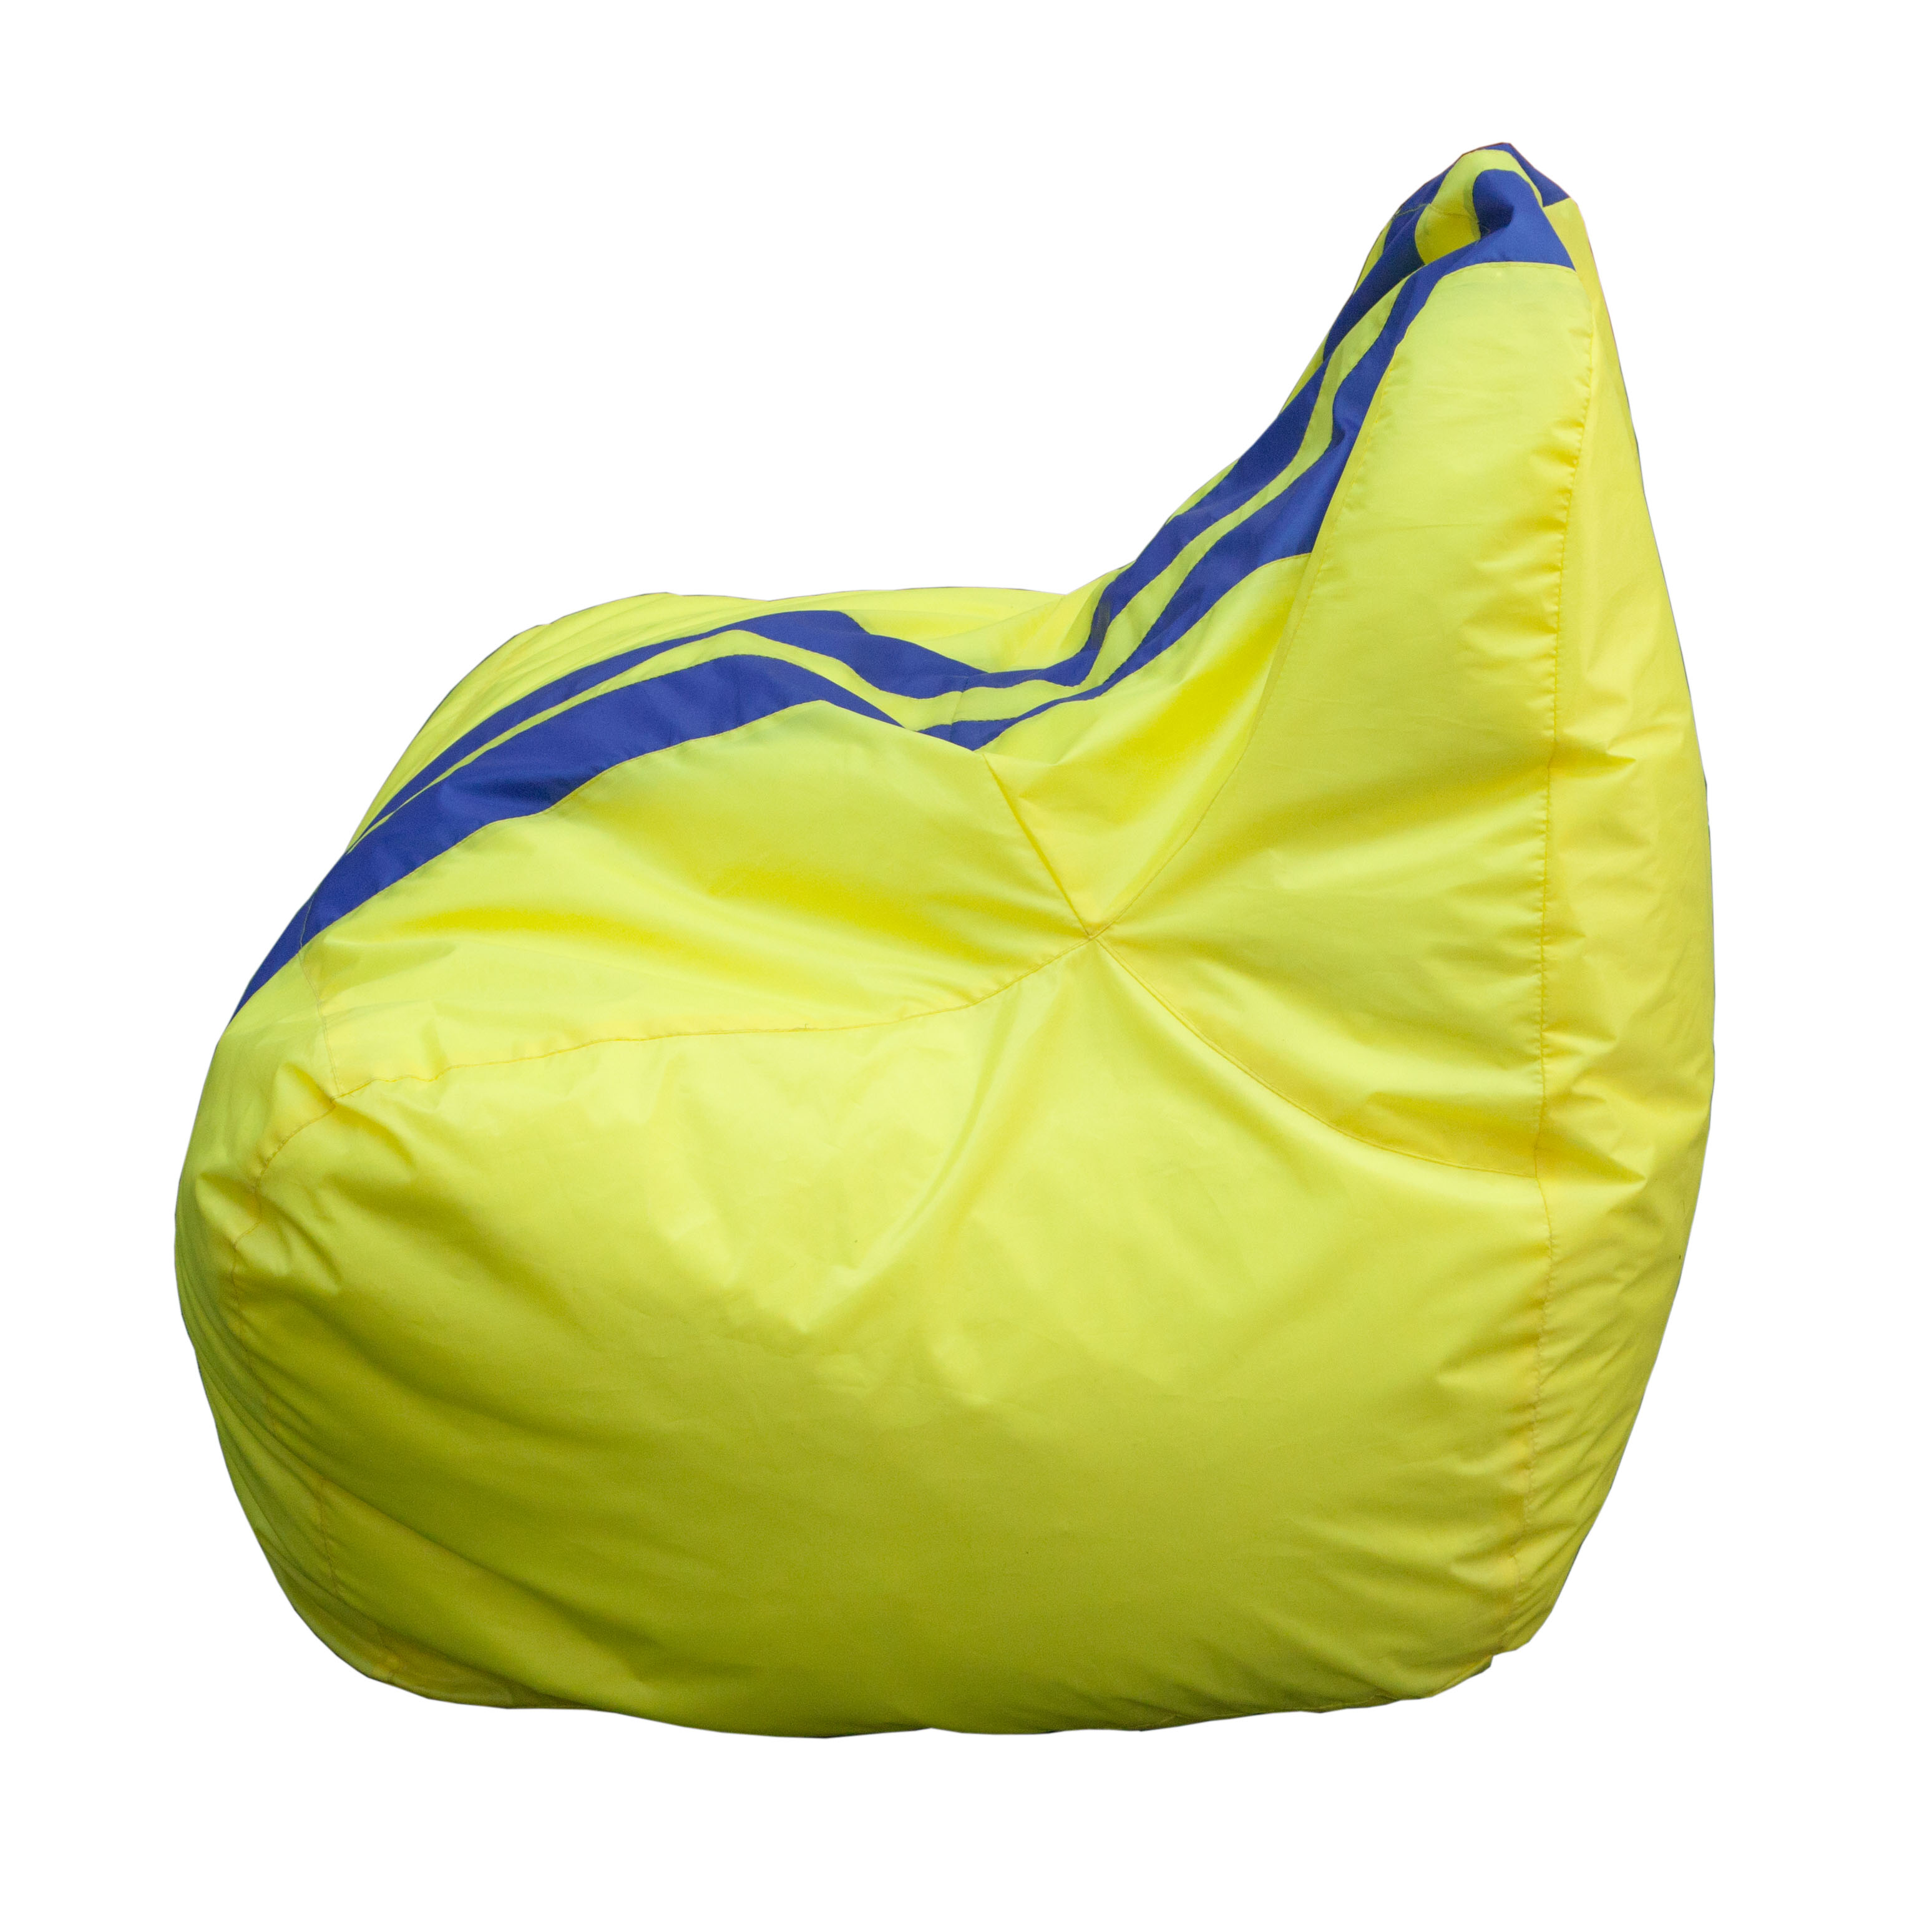 Кресло спорт желтое Dreambag, цвет желтый - фото 2